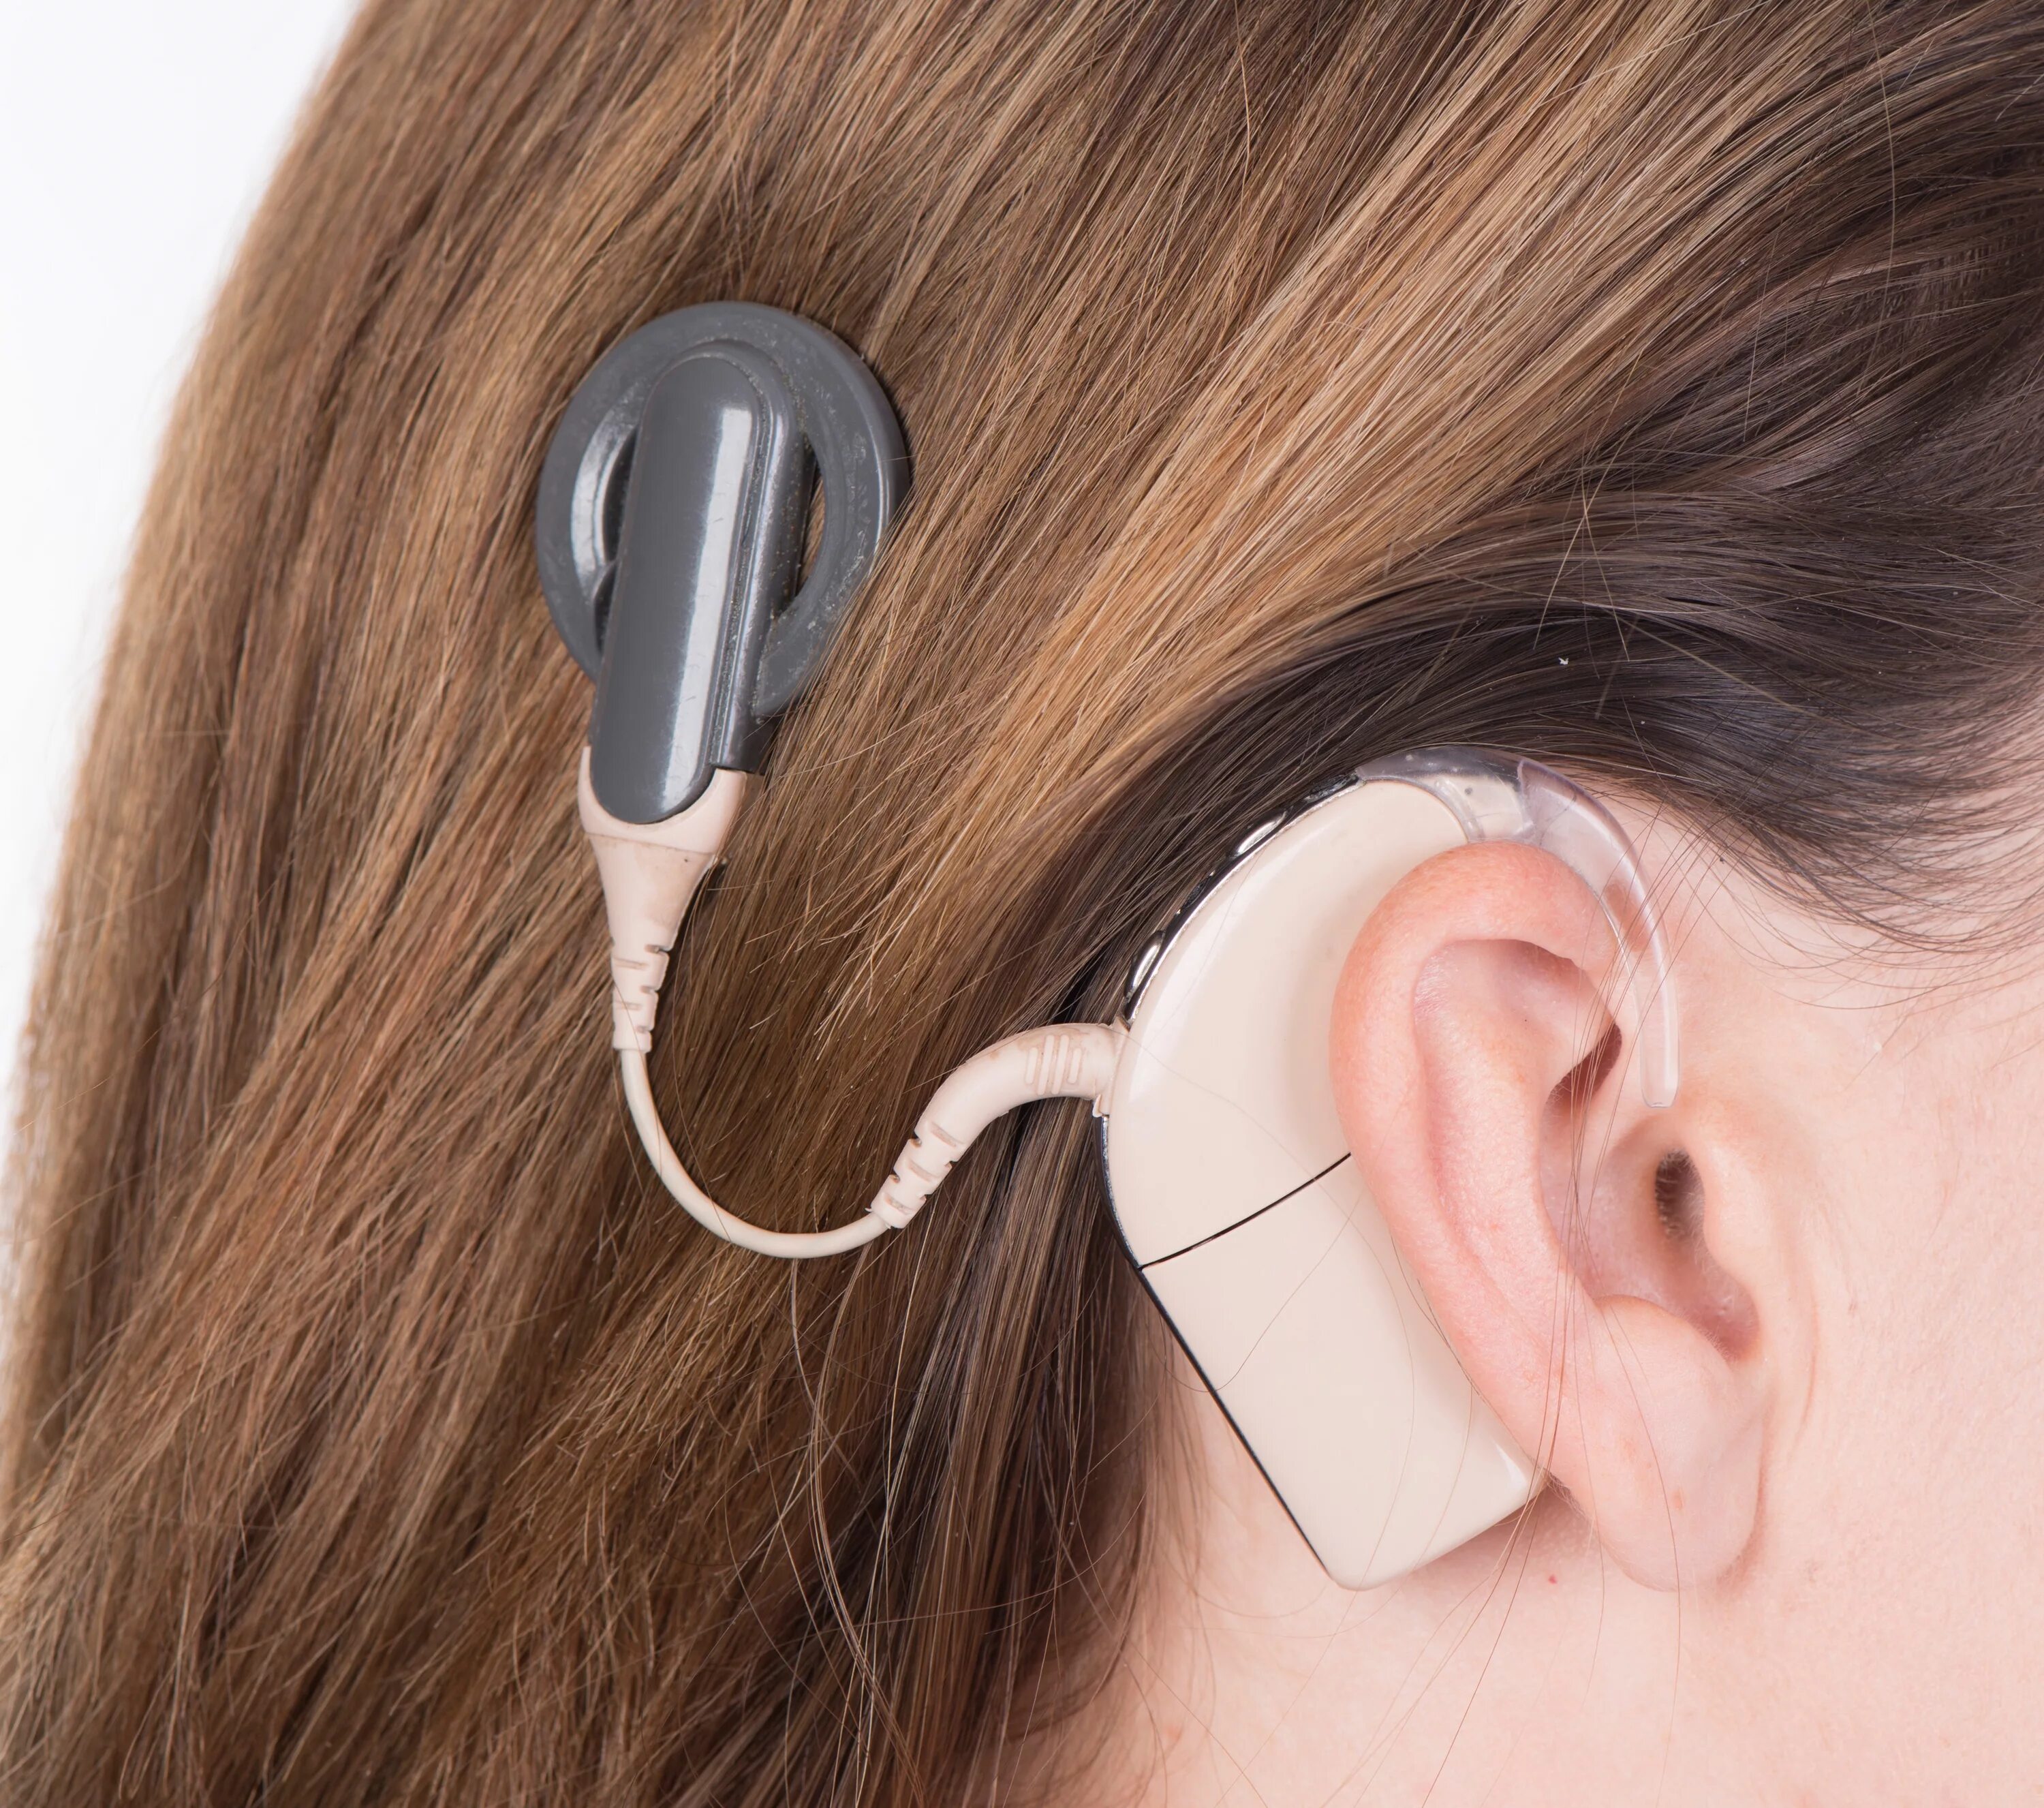 Аппарат Cochlear кохлеарный. Слуховой аппарат кохлеарный имплант. Кохлеарный имплант Кохлер. Аппарат для глухих кохлеарная имплантация. 0 hearing